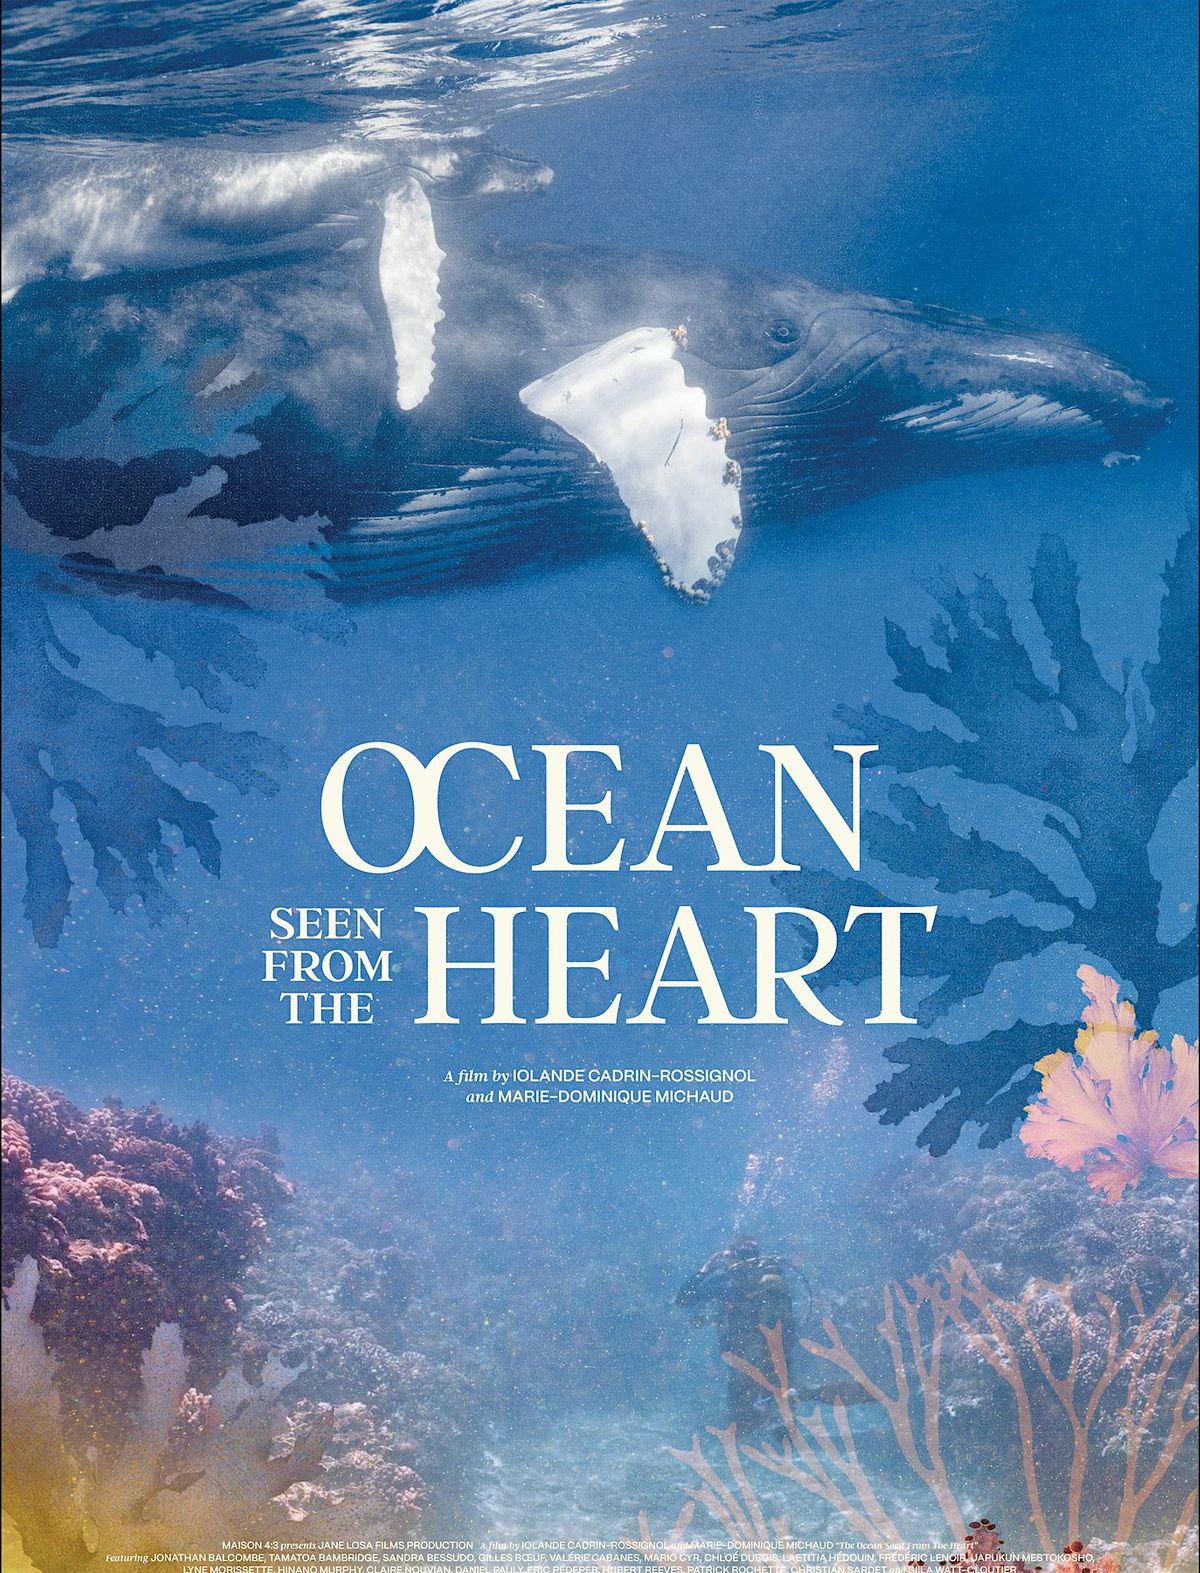 Screening : "Ocean Seen from the Heart" with film directors